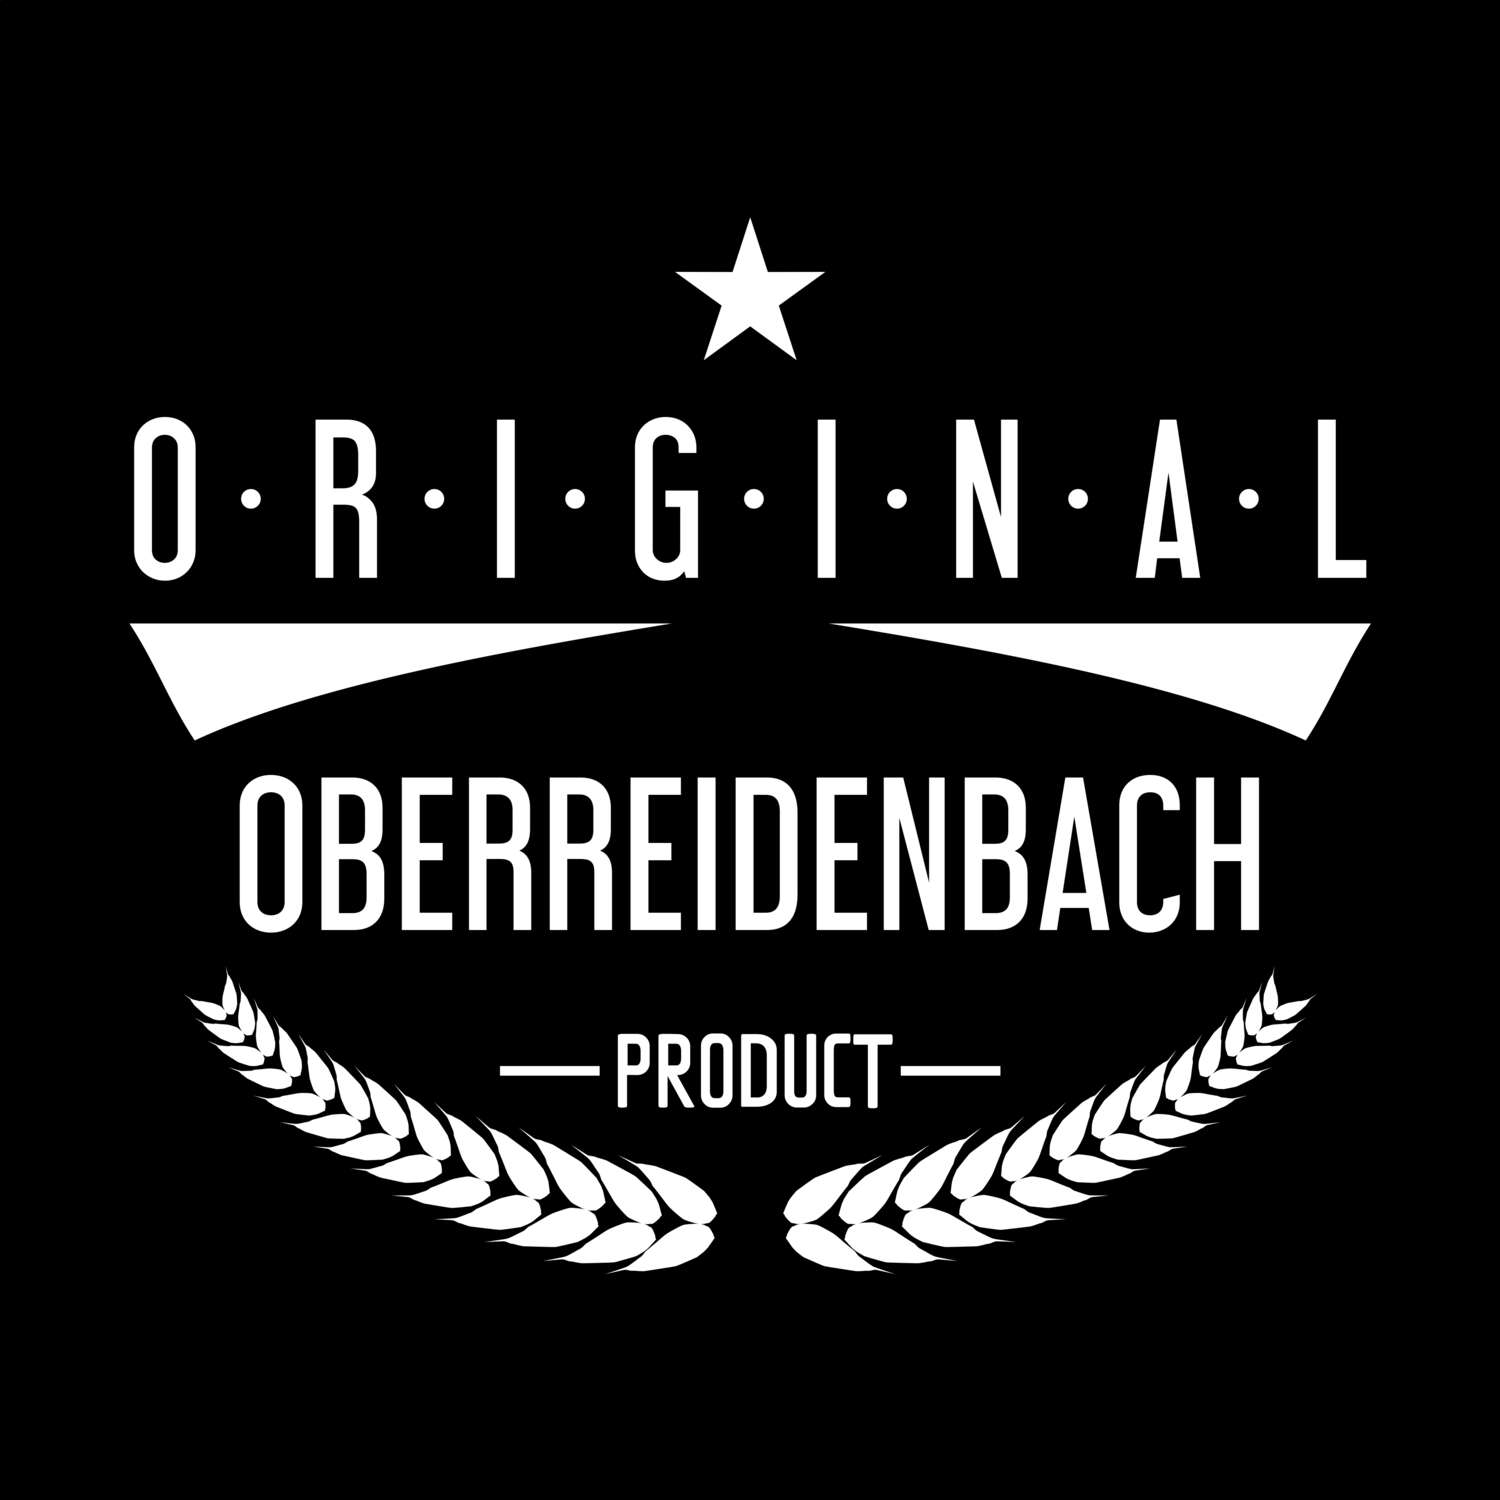 Oberreidenbach T-Shirt »Original Product«